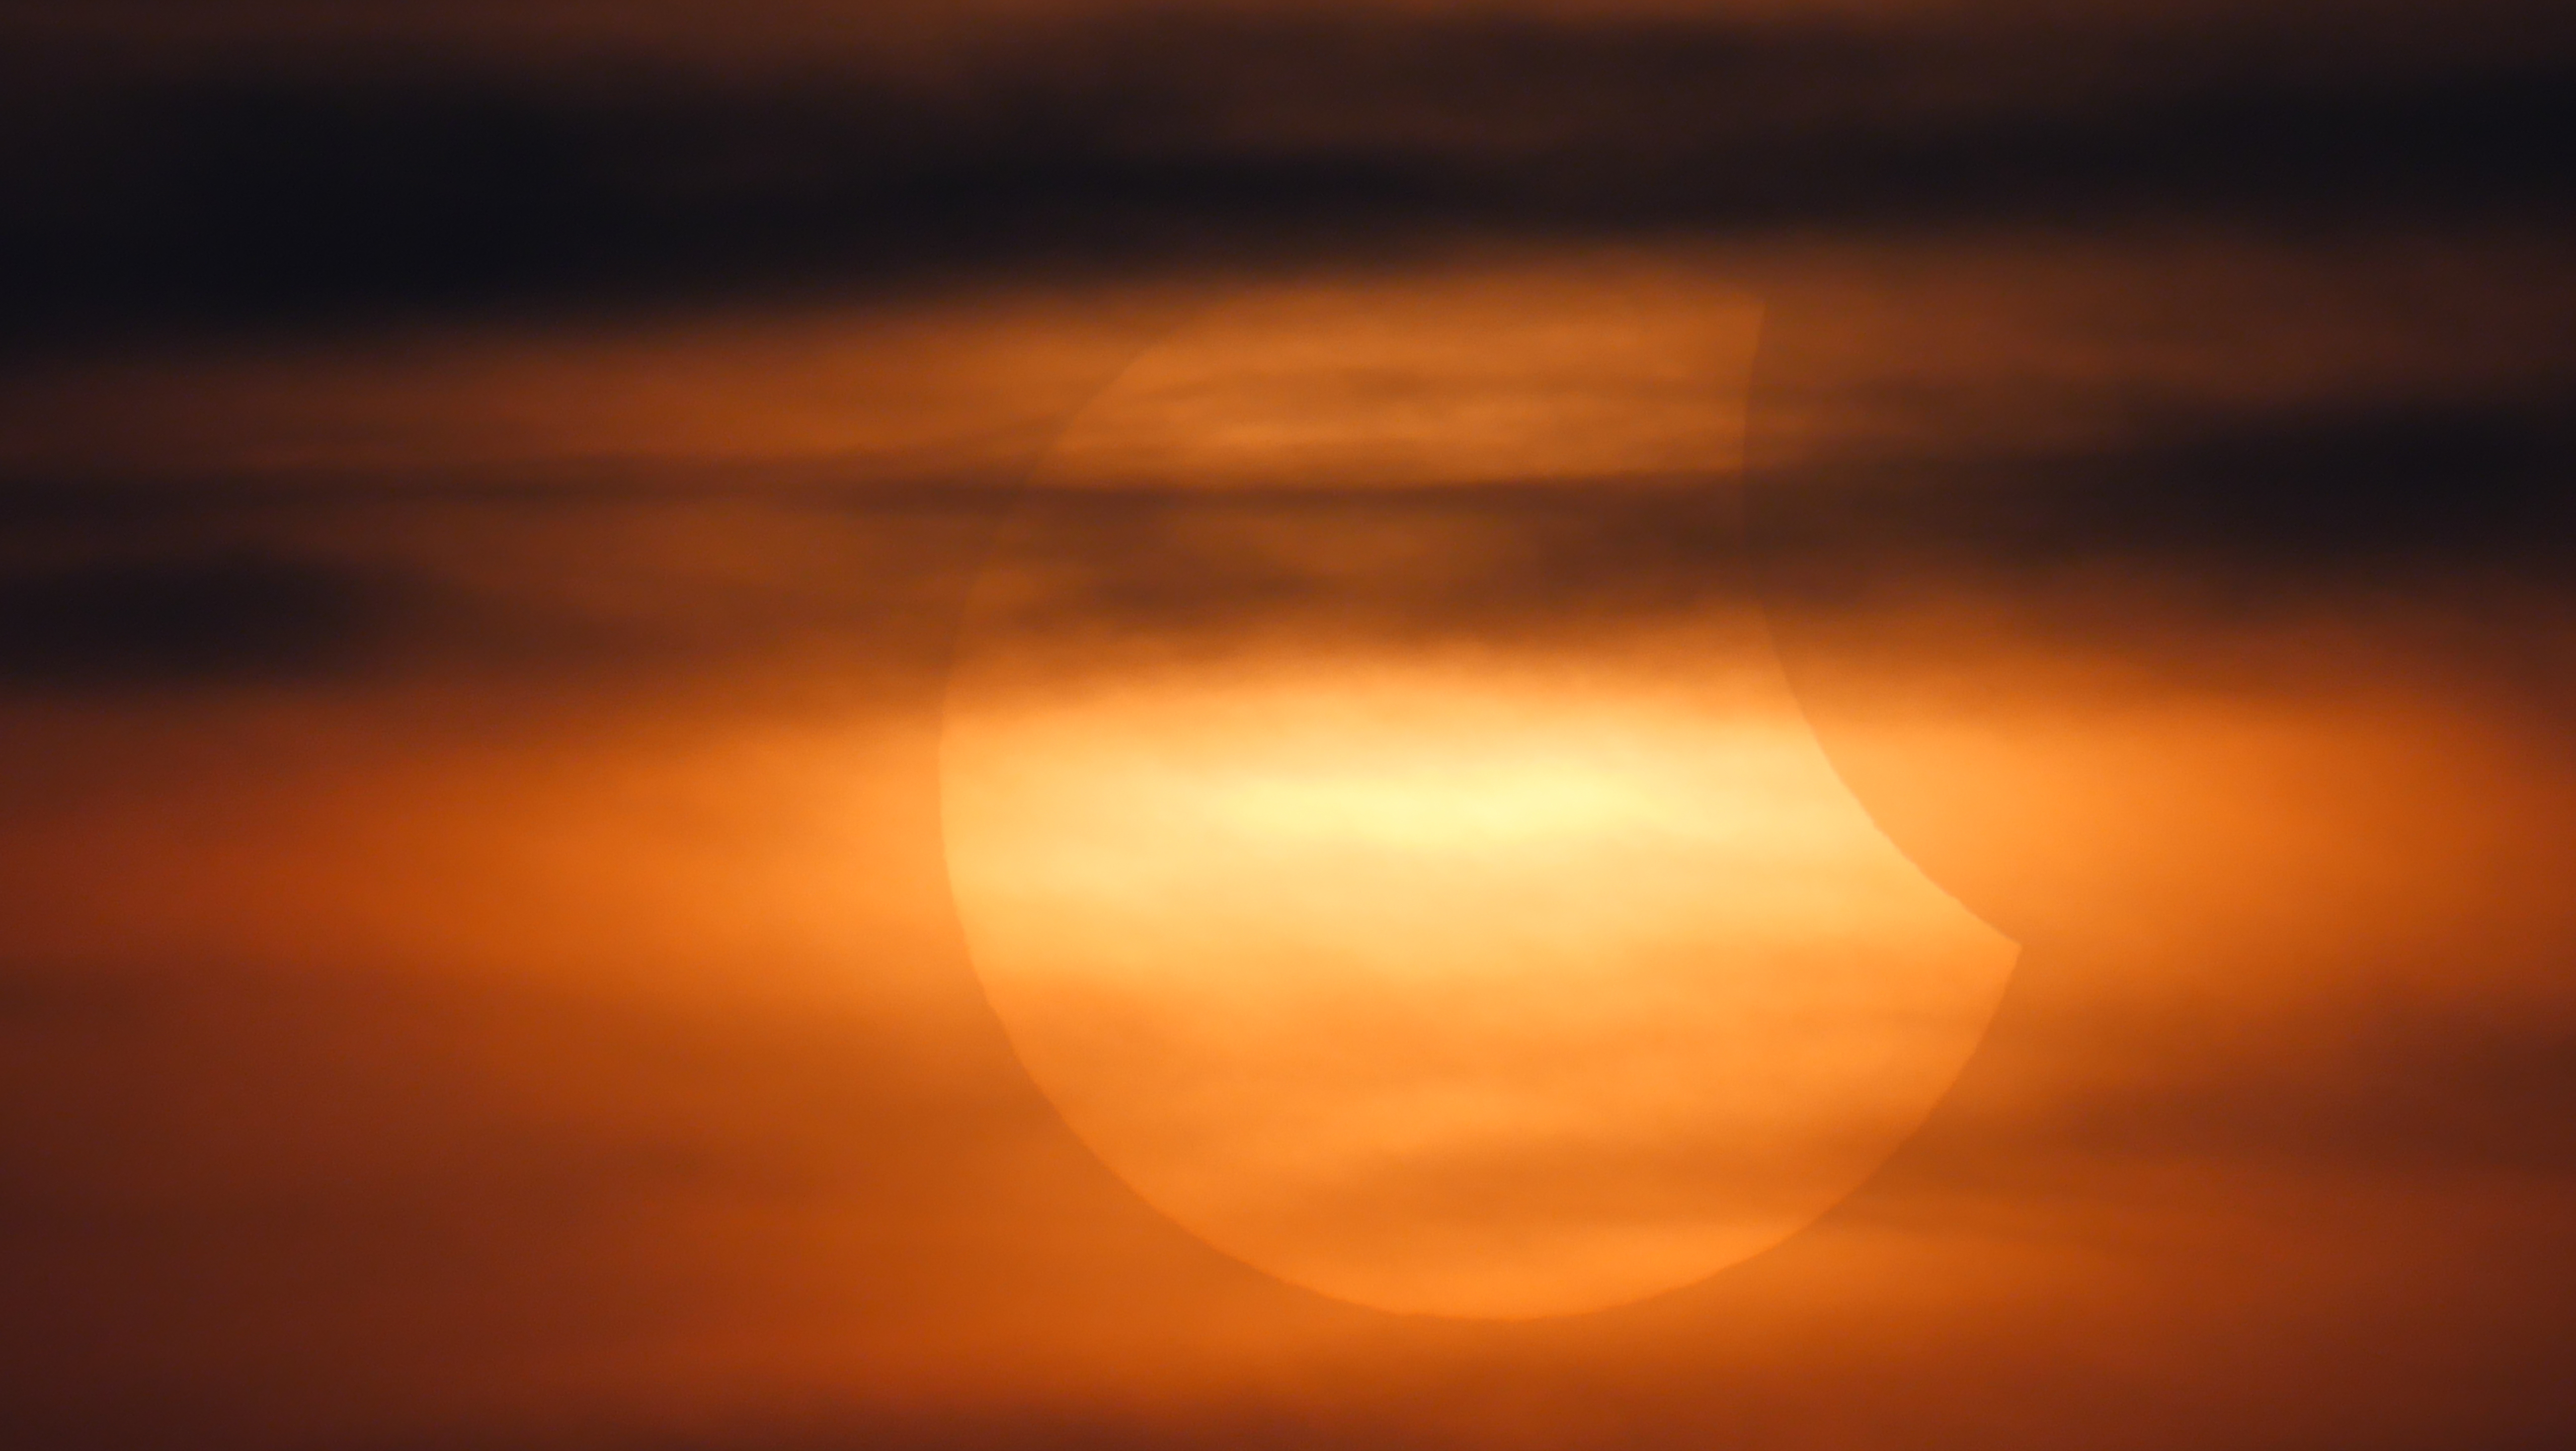 Shutterstock partial solar eclipse